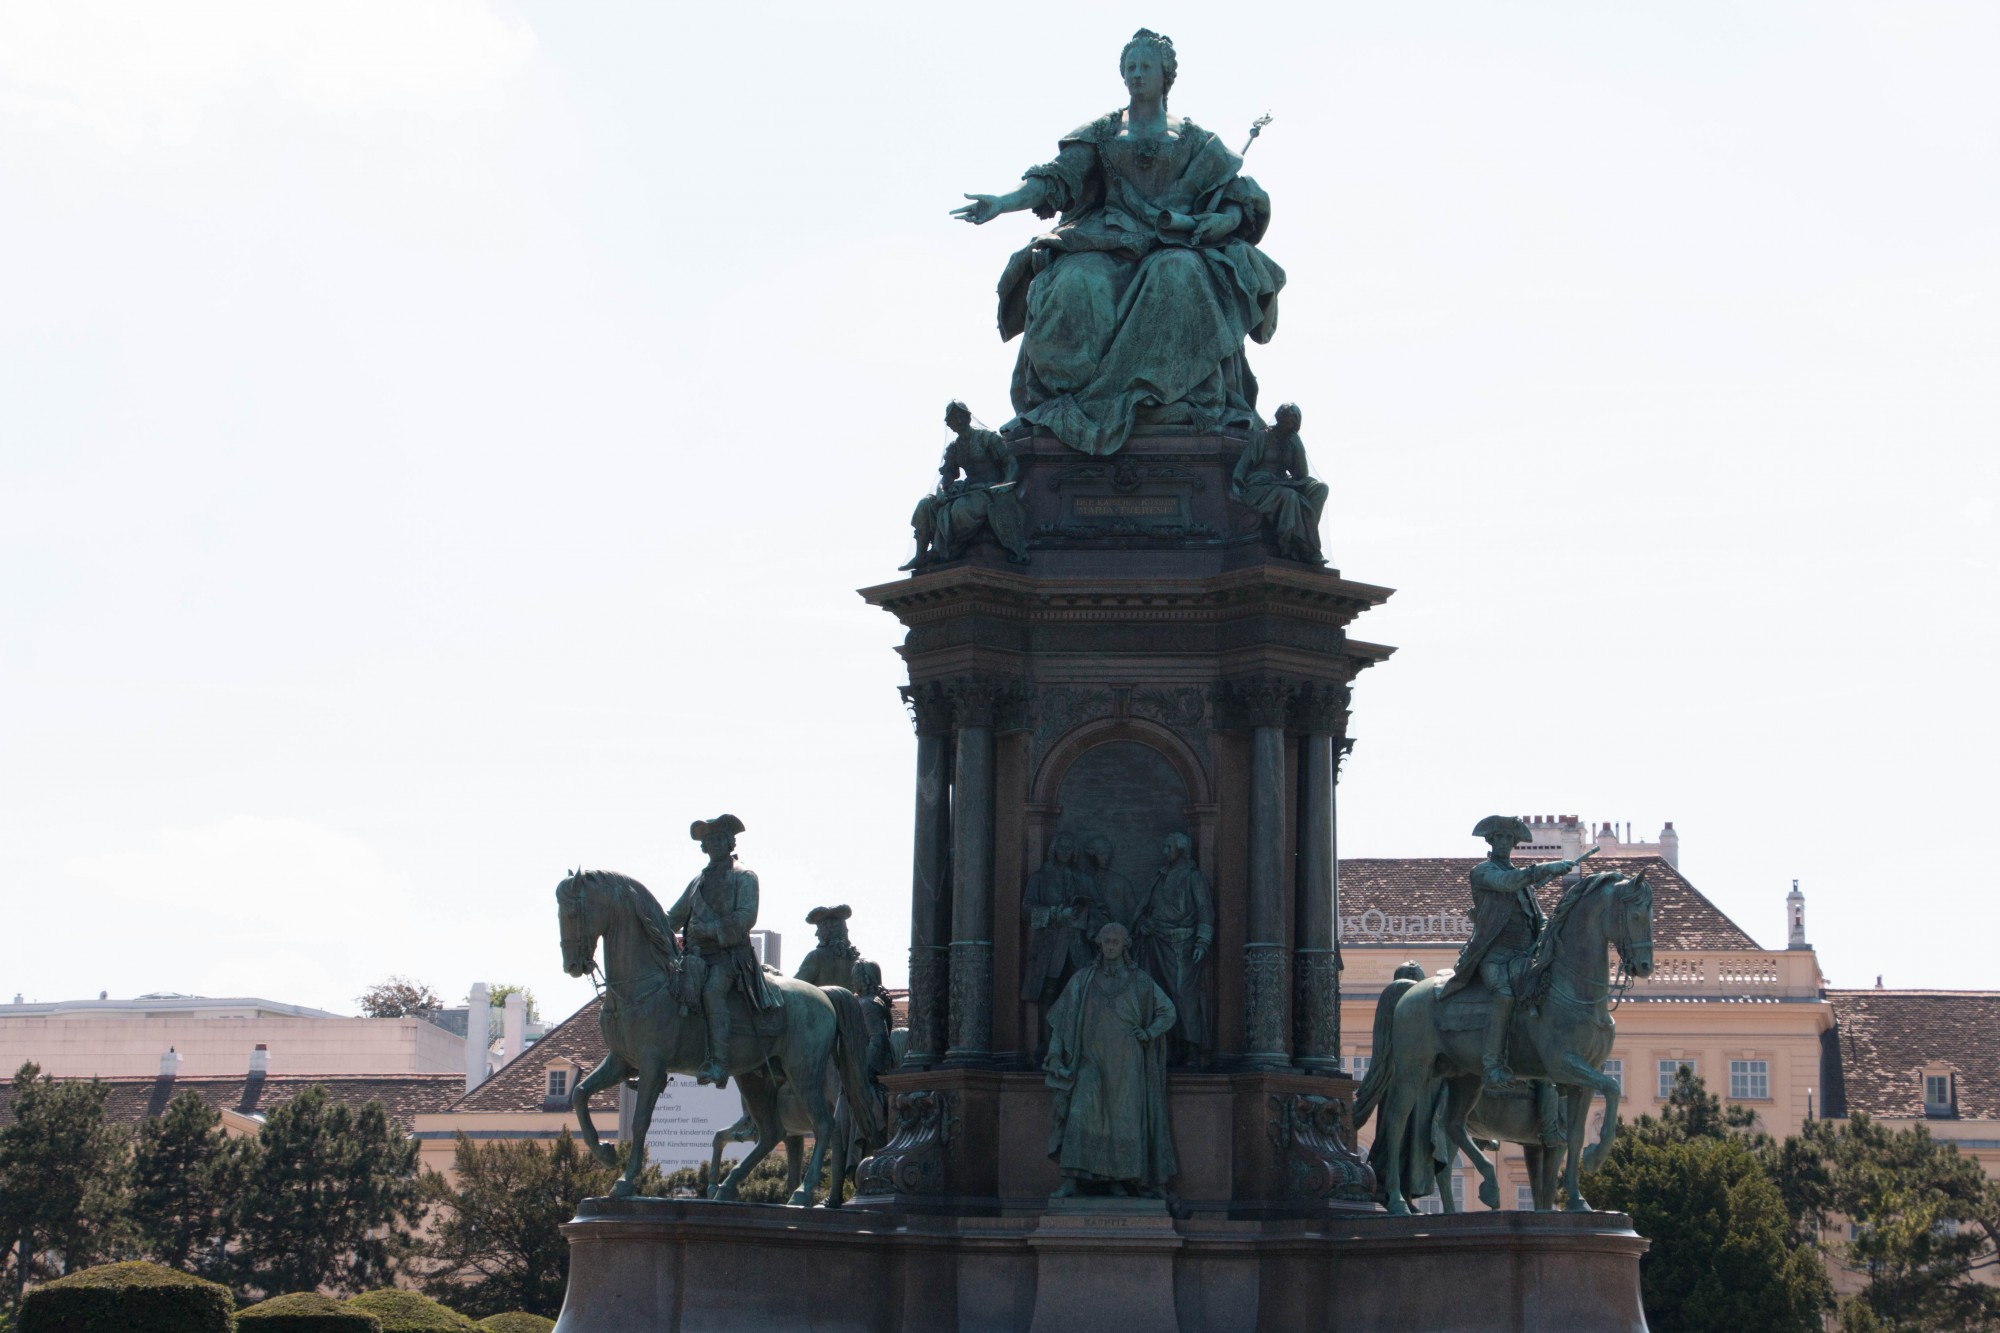 Памятник Марии Терезии в Вене